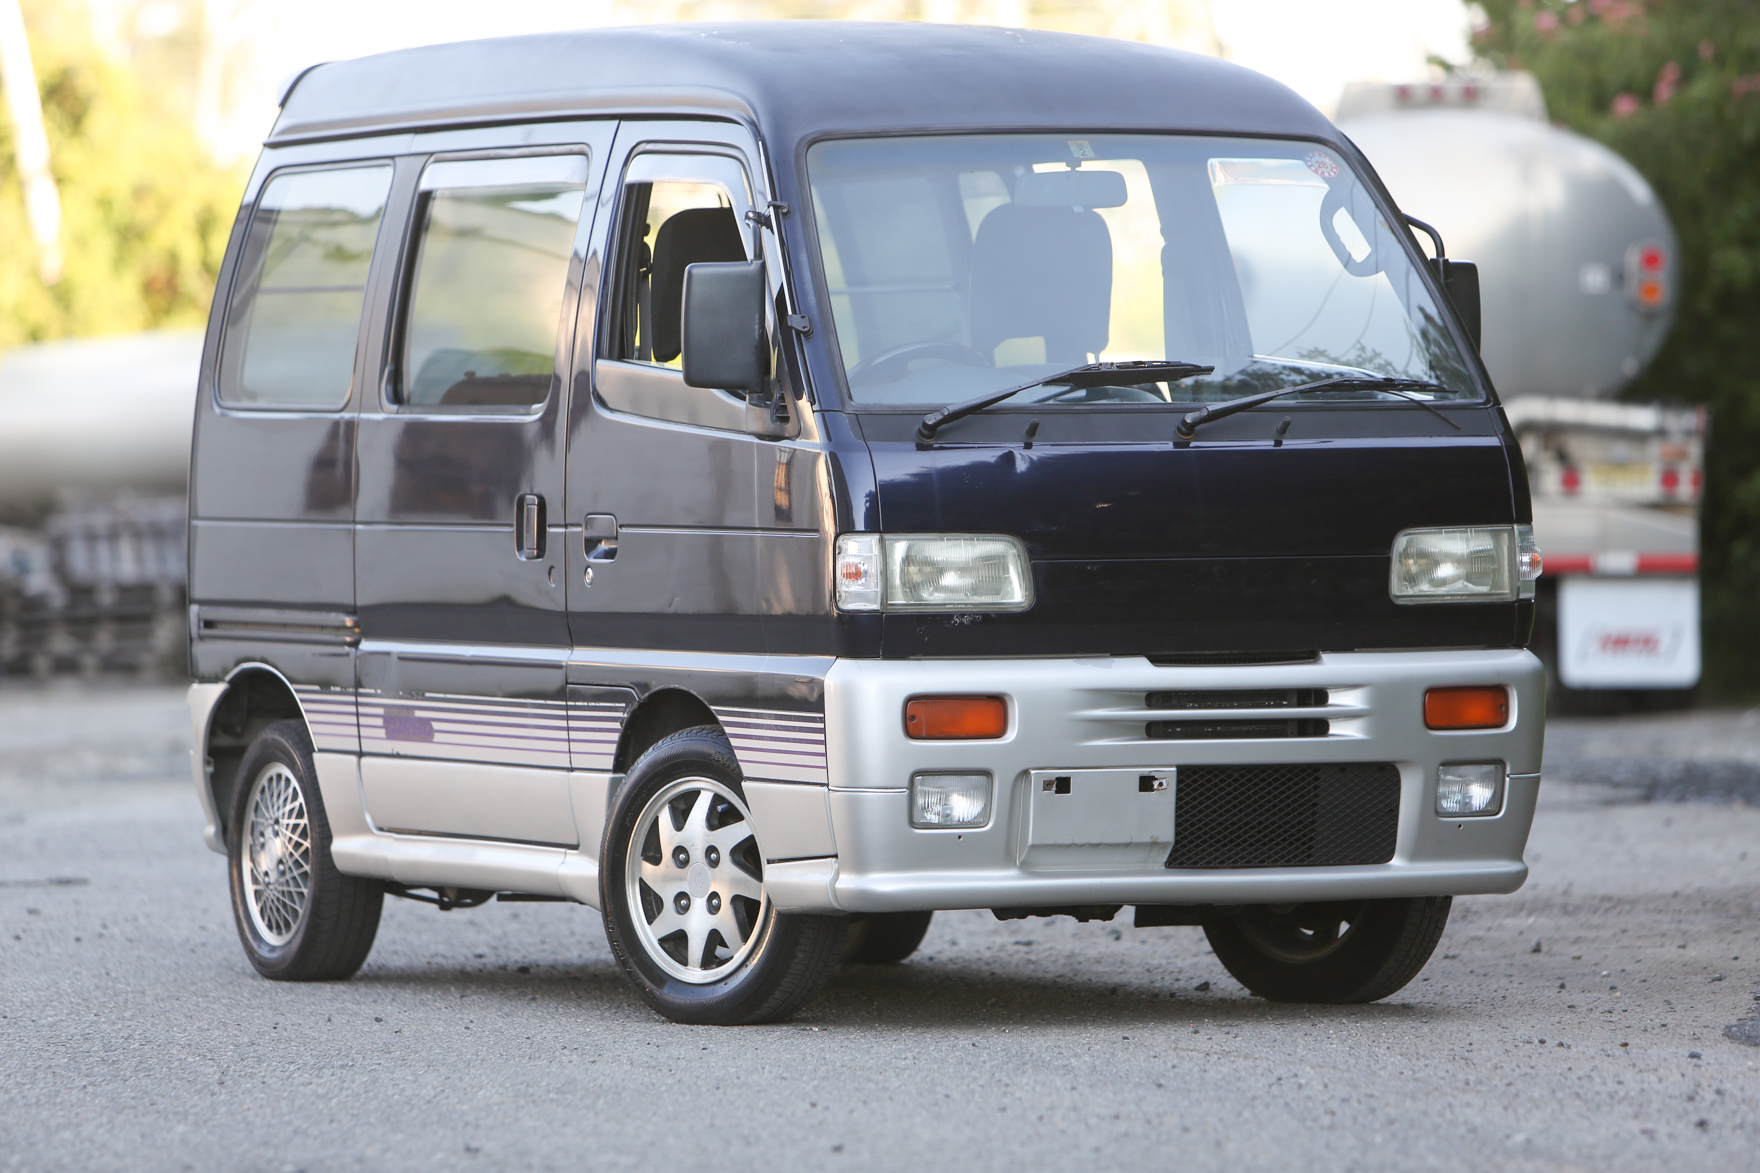 1992 Suzuki Every Van 4WD TURBO - $7,500